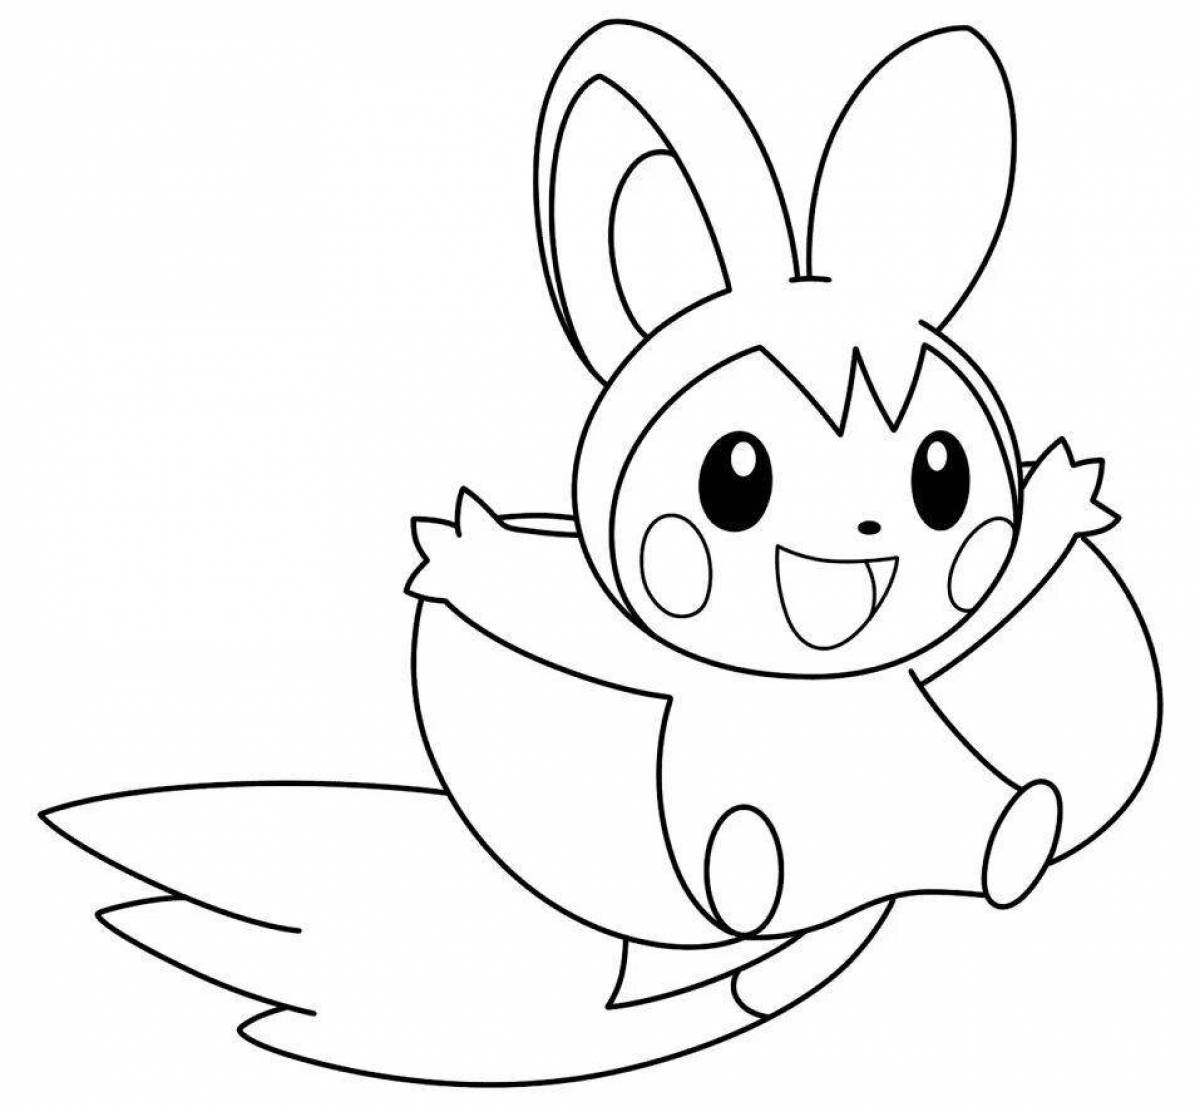 Coloring page joyful piplup pokemon